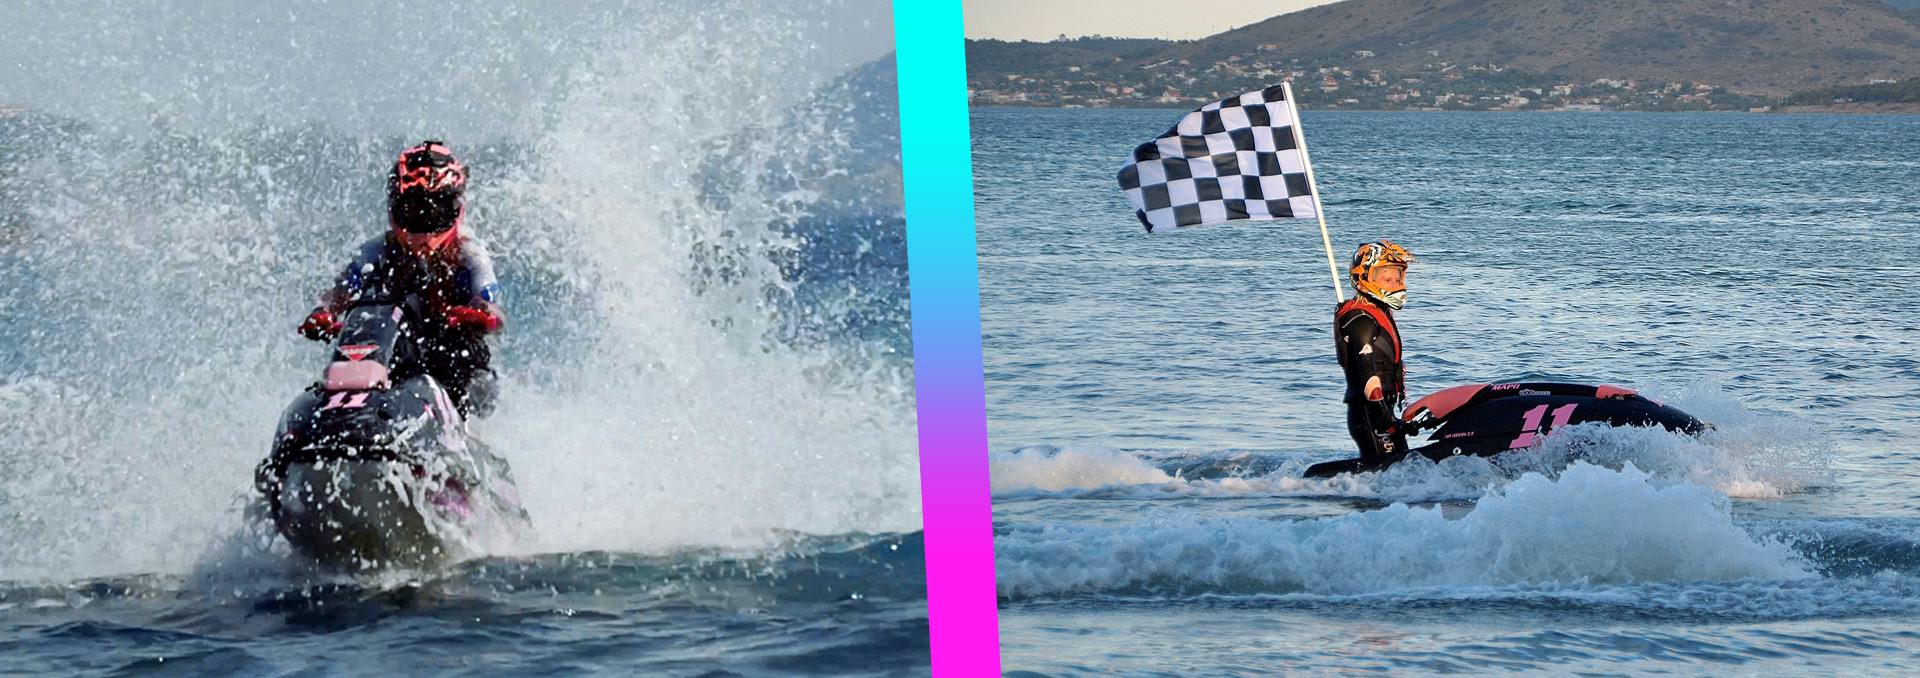 motorsport-sea-champion-passion-jet-kungfu-marw-sakellaropoulou-jet-ski